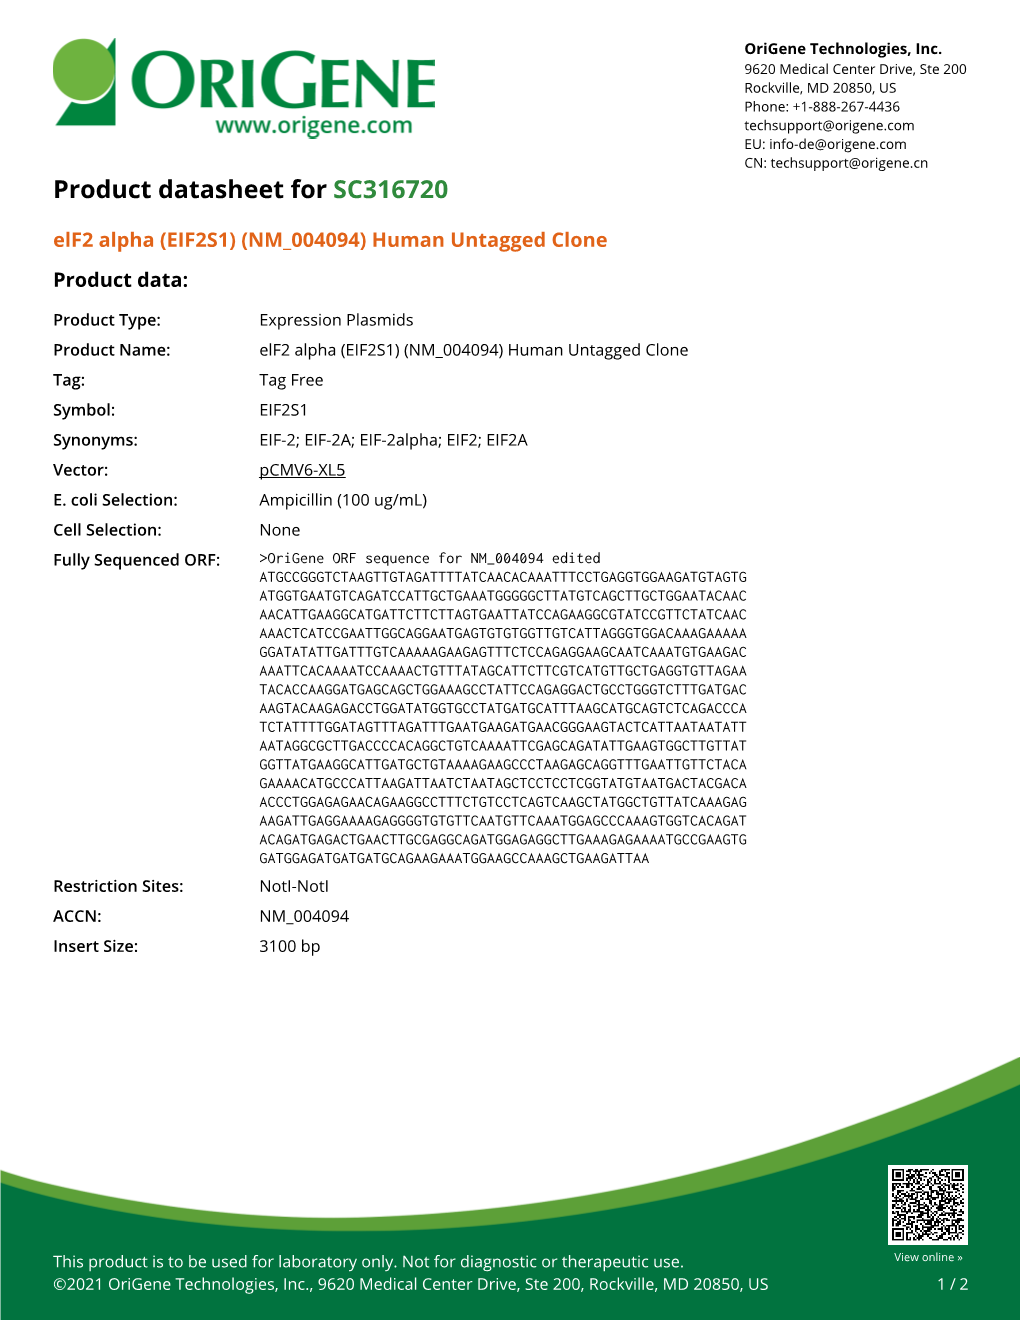 Elf2 Alpha (EIF2S1) (NM 004094) Human Untagged Clone Product Data